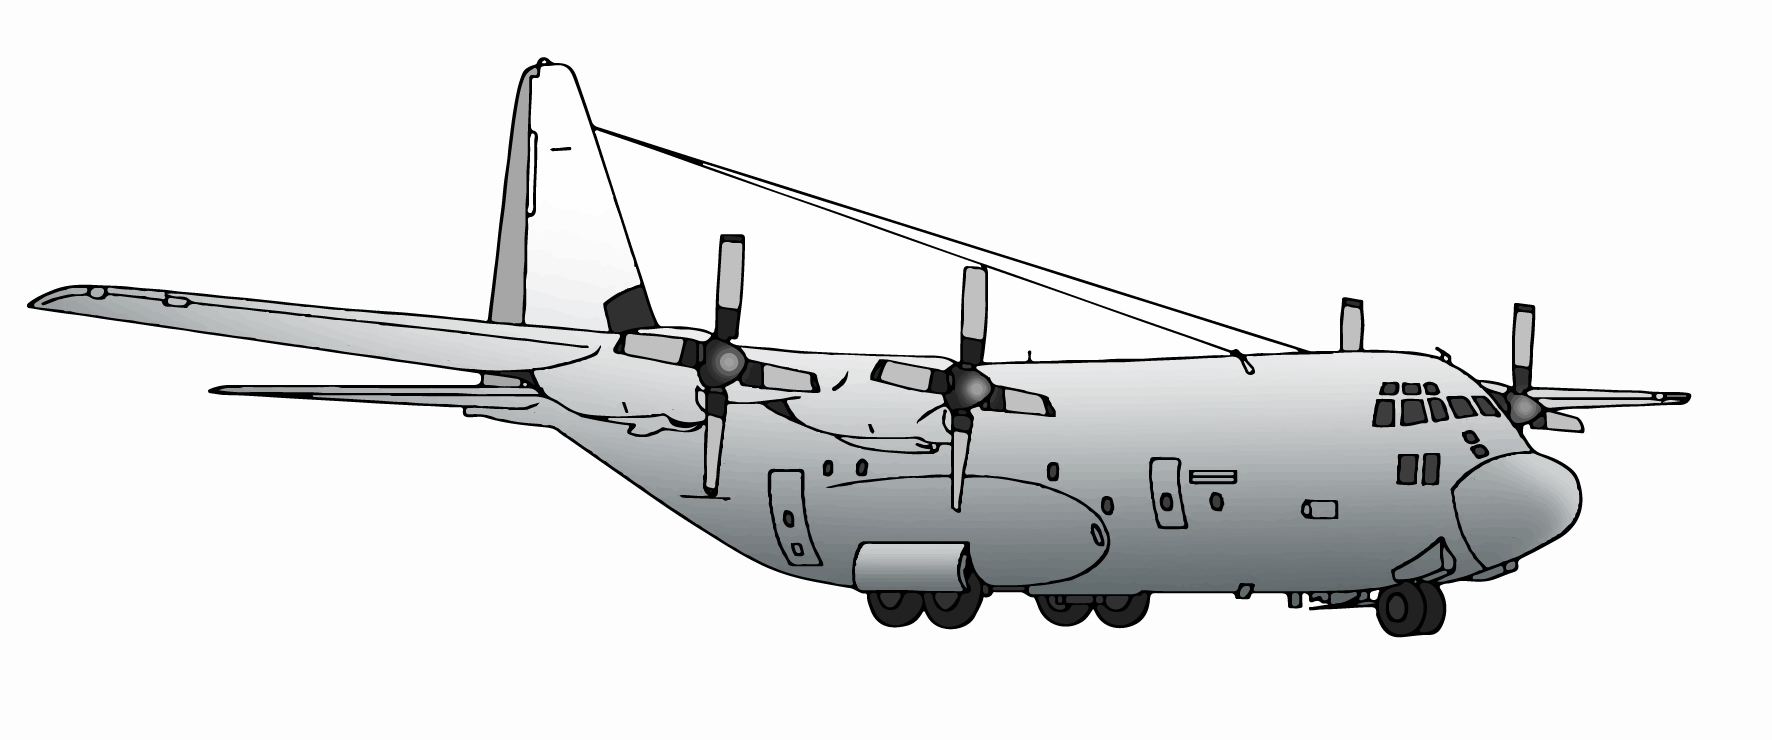 Lockheed C-130 Hercules drawing illustration clipart